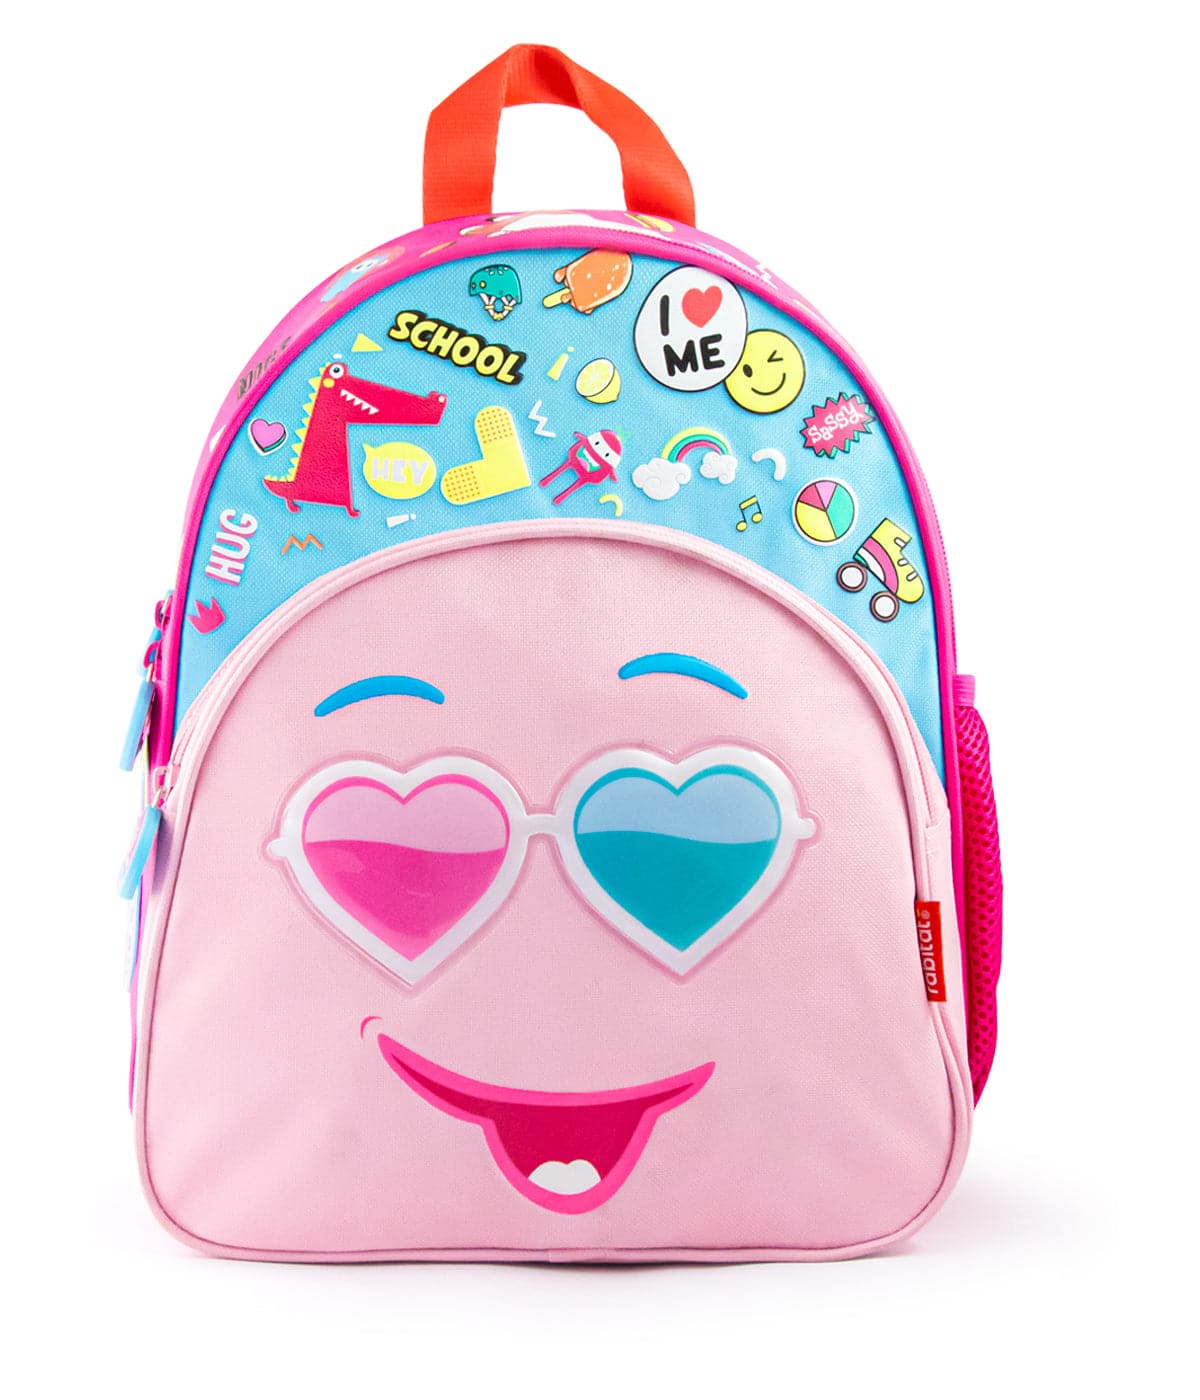 School bag stock vector. Illustration of adventure, backpack - 31290118